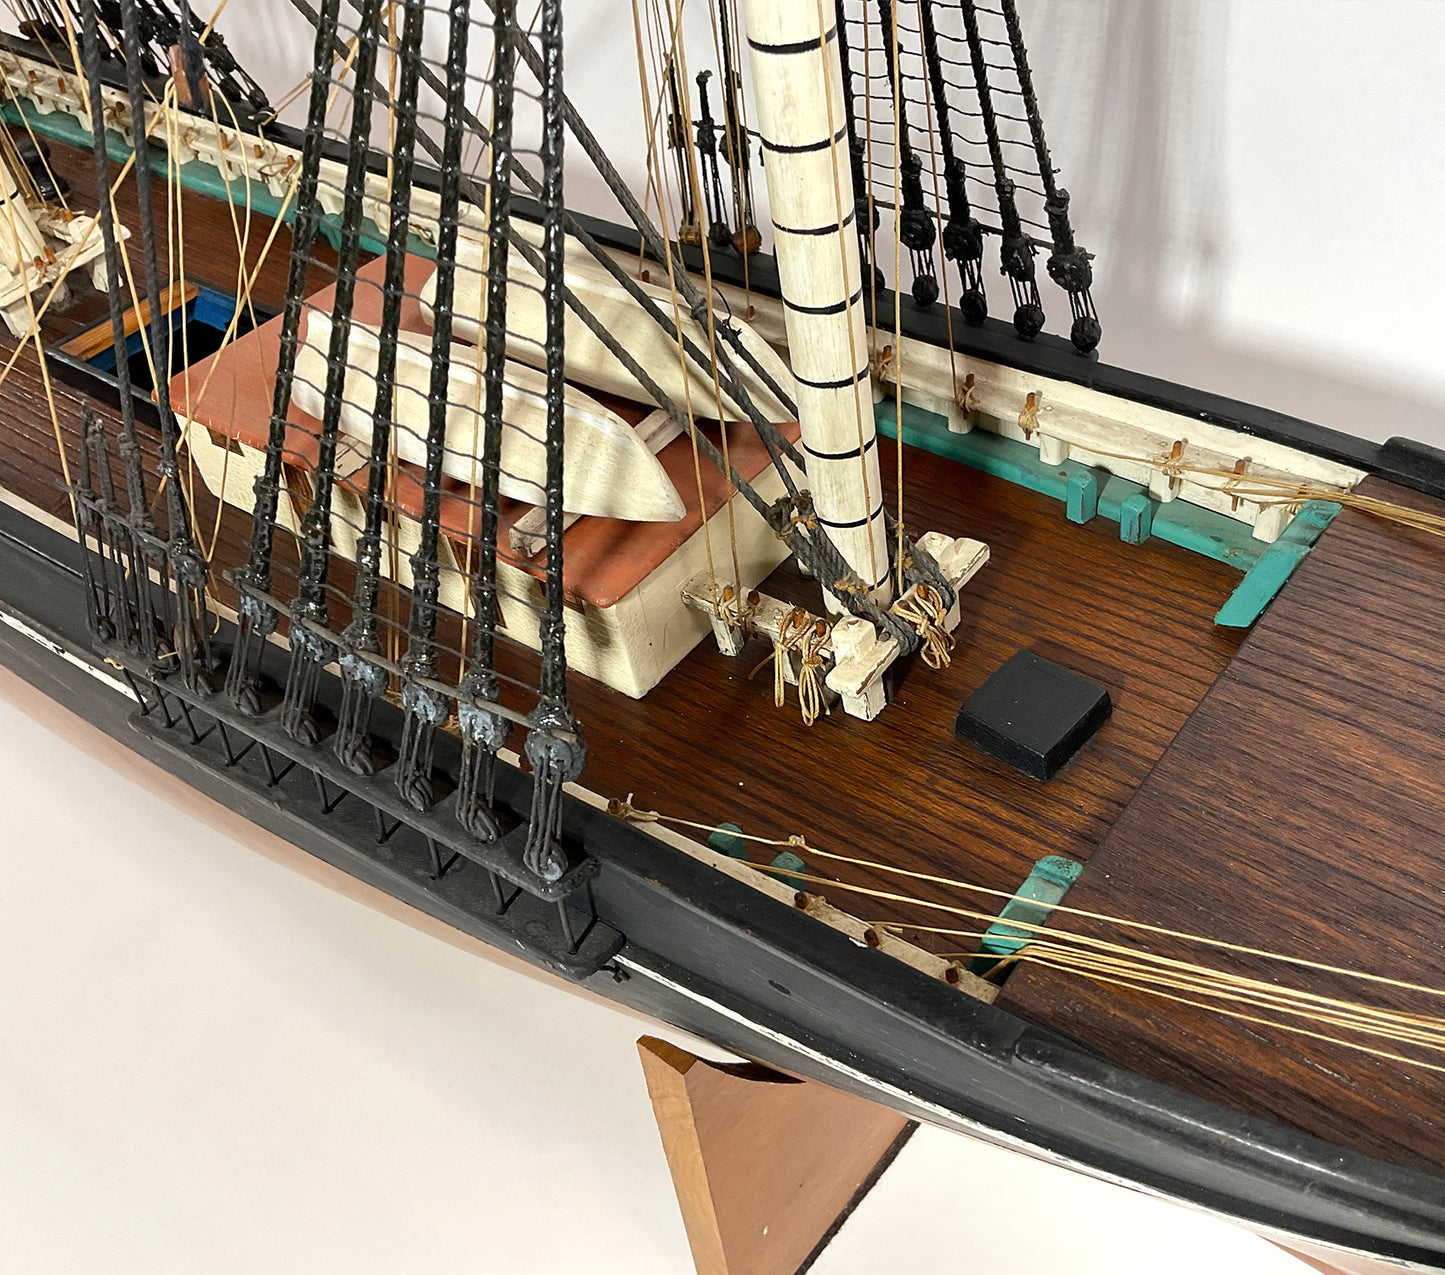 Antique Ships Model "Sovereign Of The Seas" - Lannan Gallery